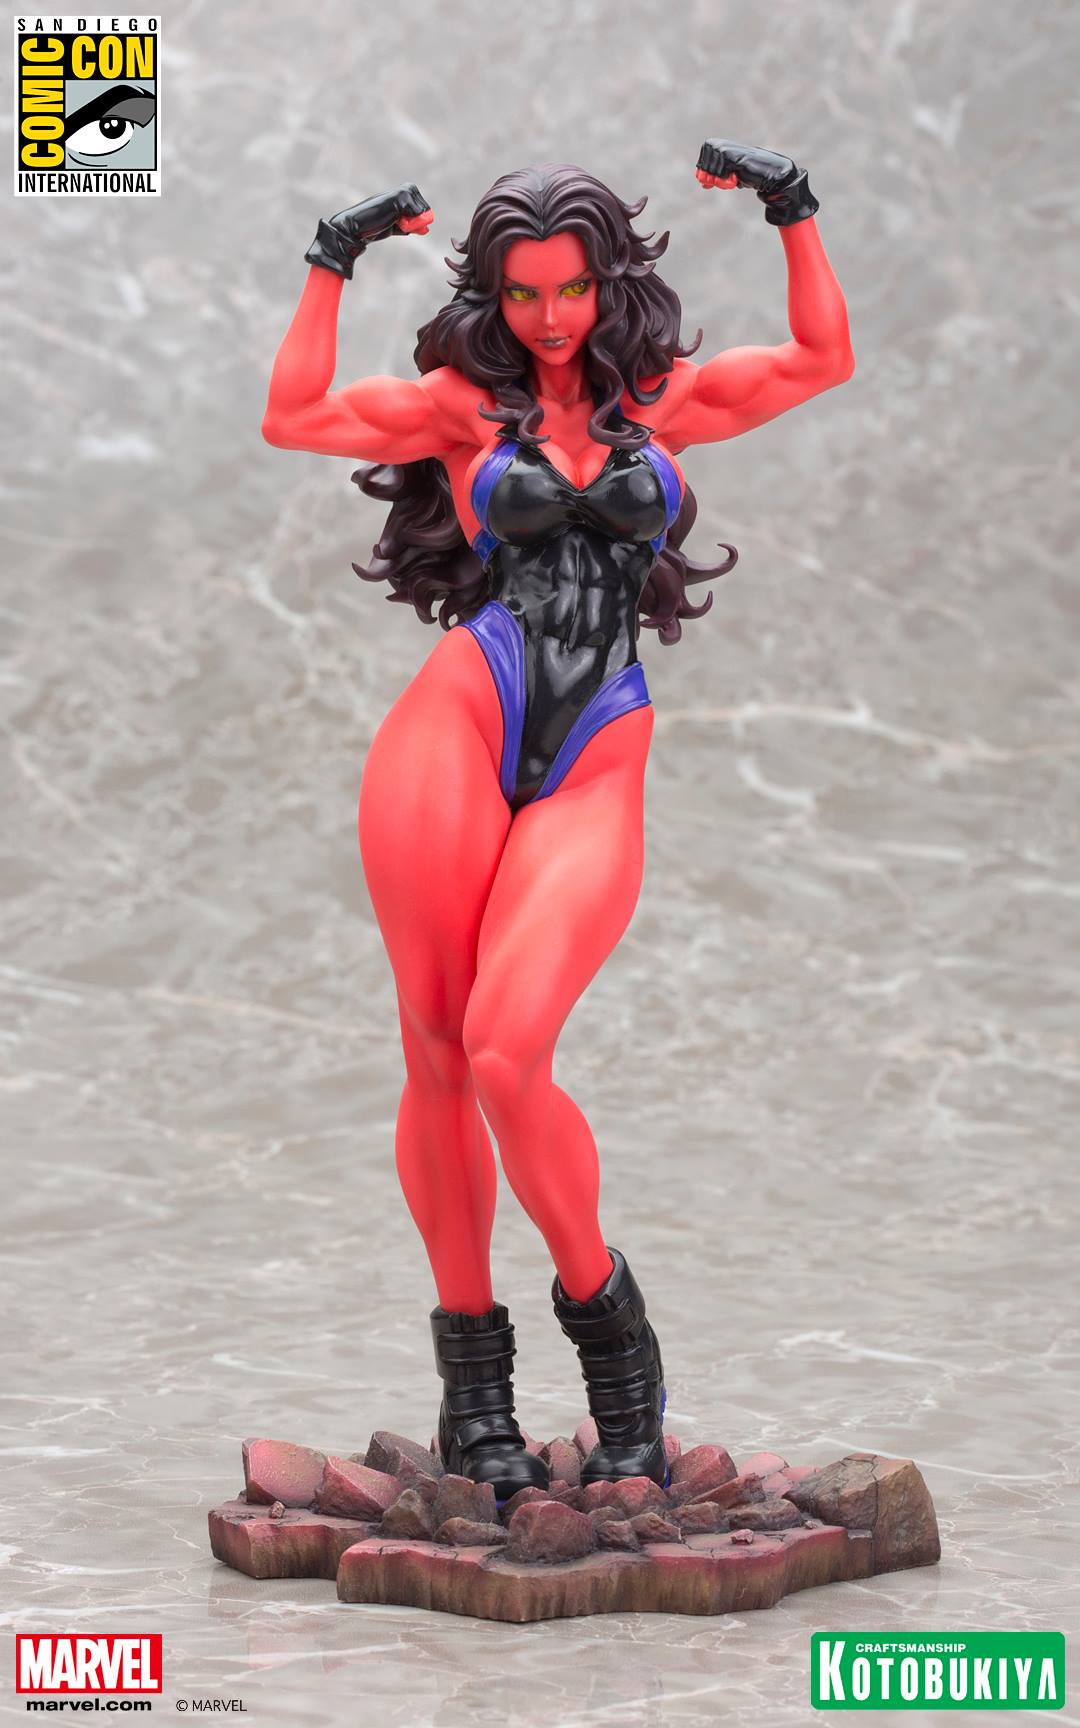 Action Figures: Marvel, DC, etc. - Página 4 Red-she-hulk-bishoujo-statue-2015-sdcc-exclusive-marvel-kotobukiya-9